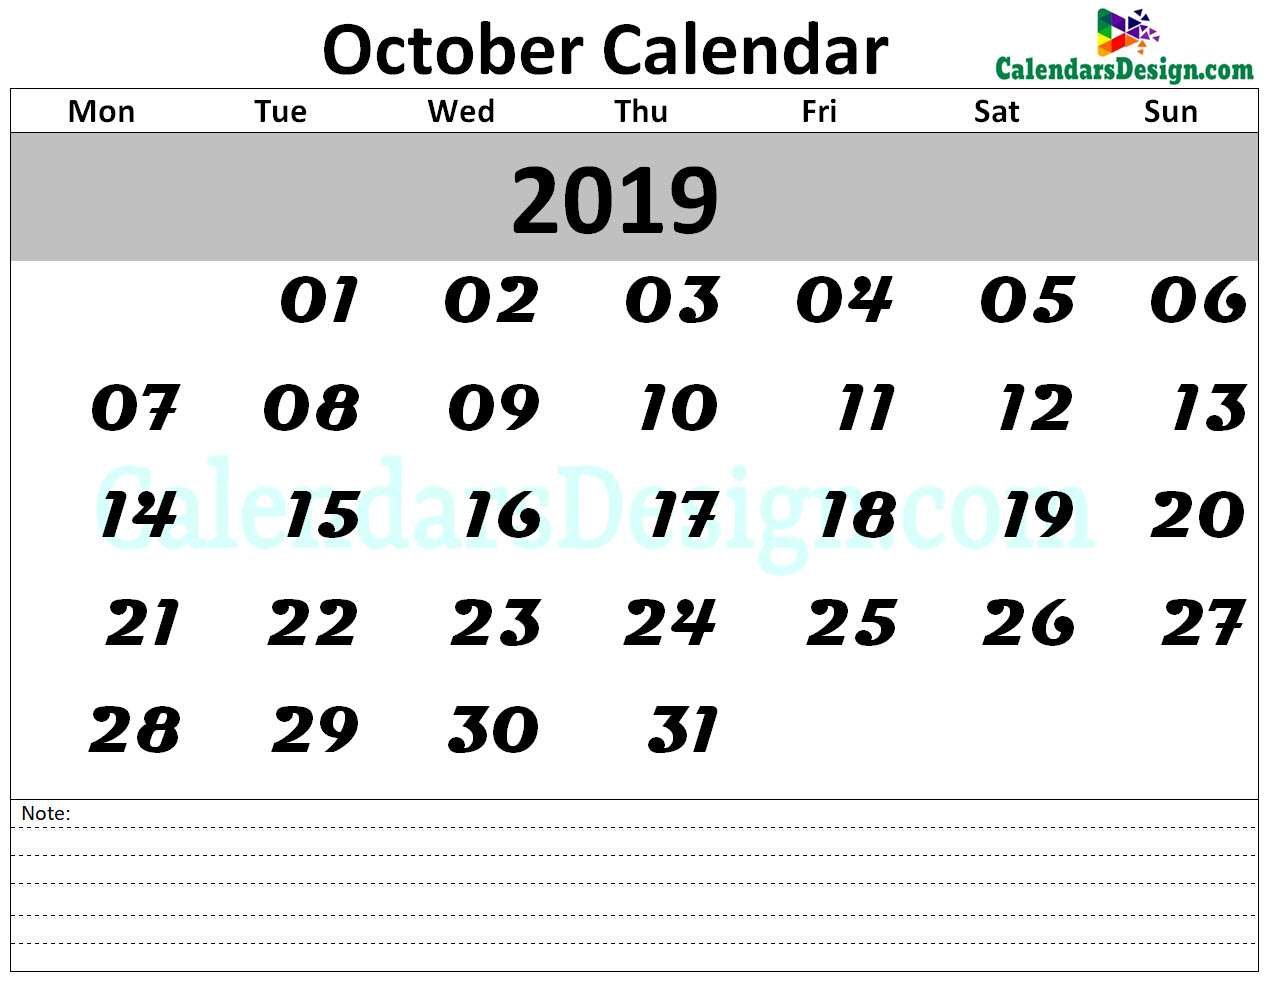 October Calendar 2019 Template